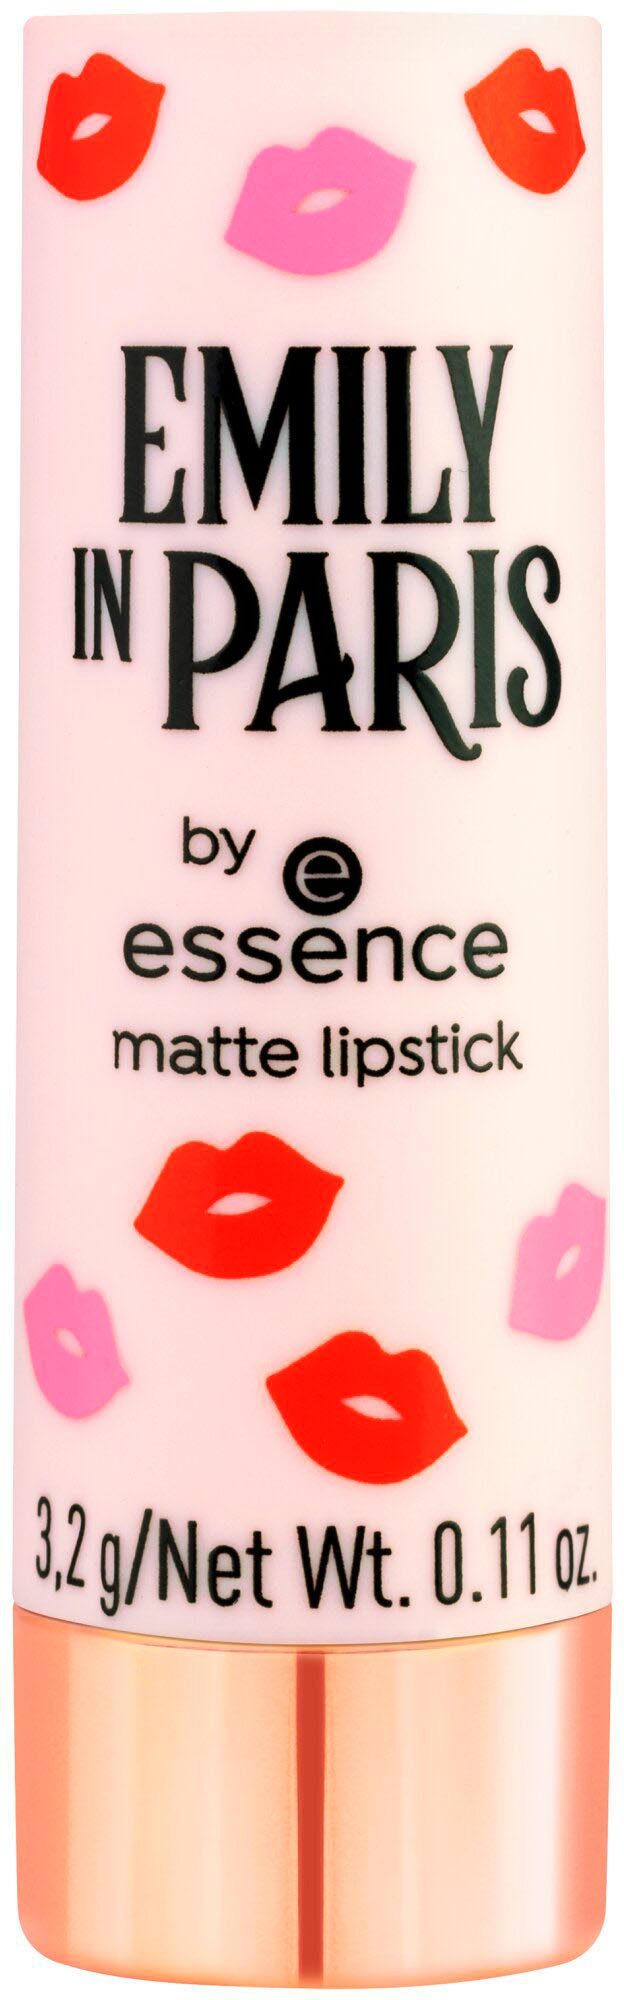 essence EMILY Lippenstift matte by PARIS lipstick Essence IN